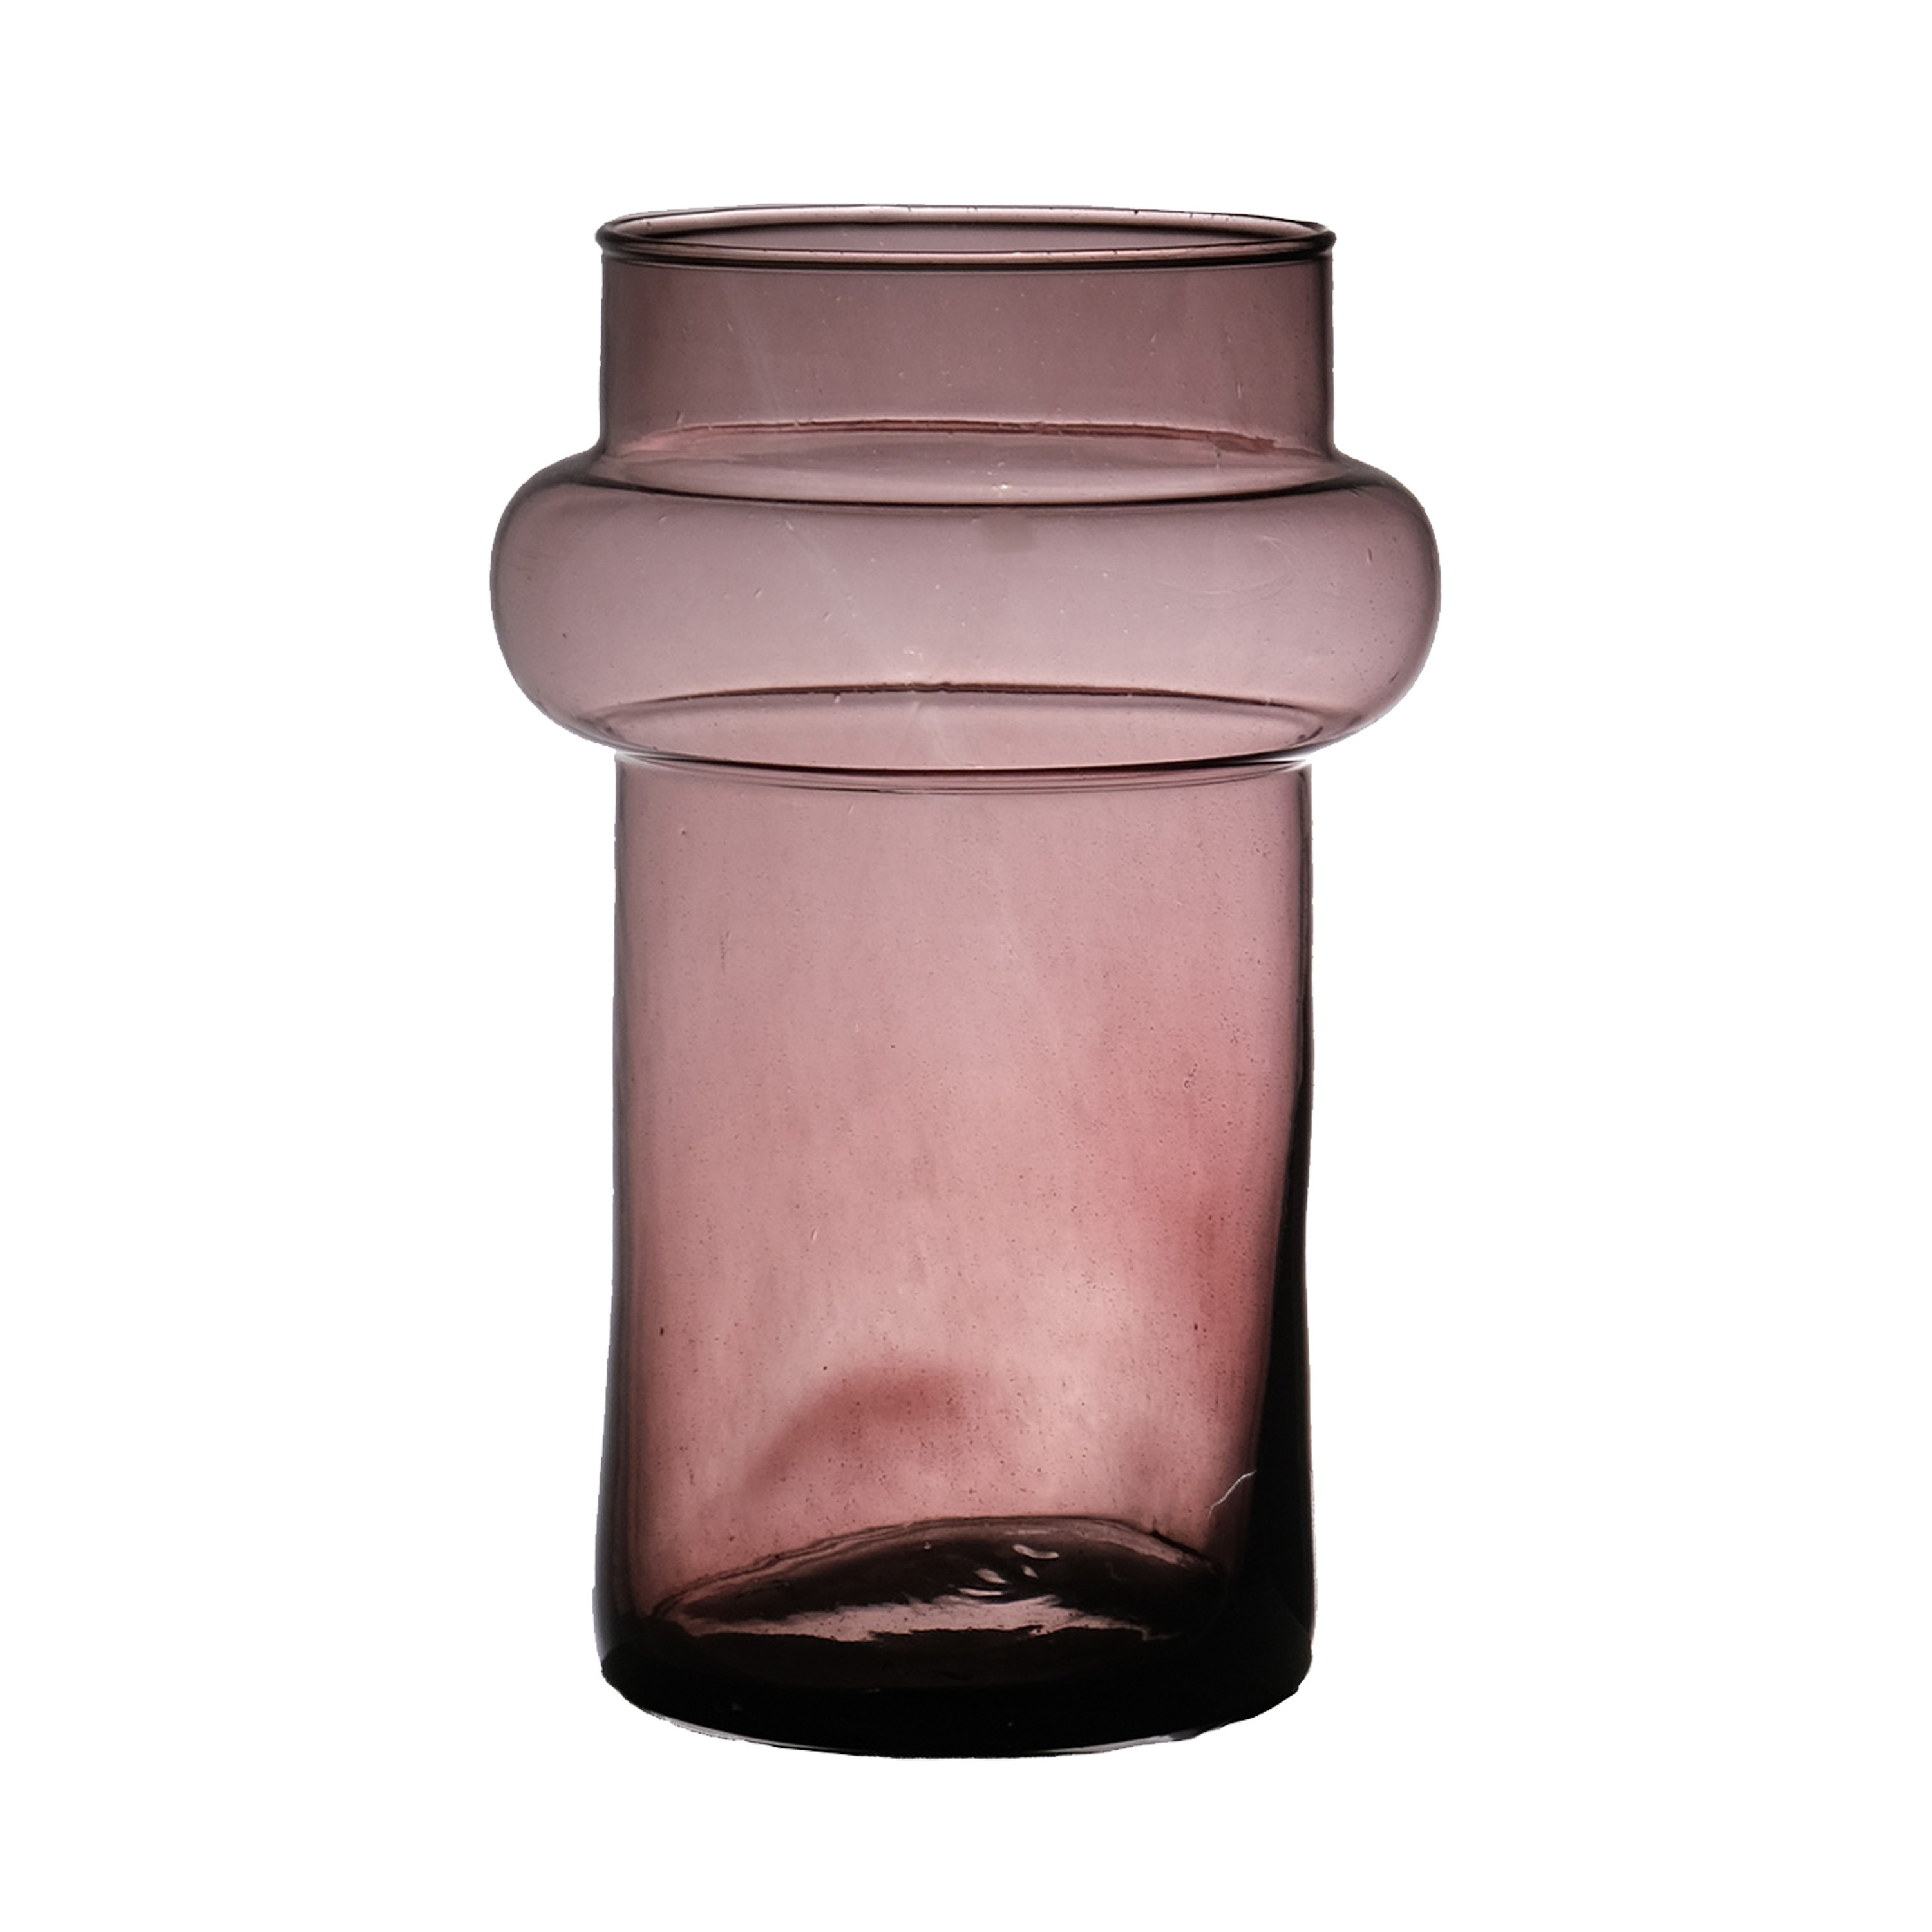 Hakbijl Glass Bloemenvaas Luna - transparant mauve - eco glas - D16 x H25 cm - cilinder vaas -